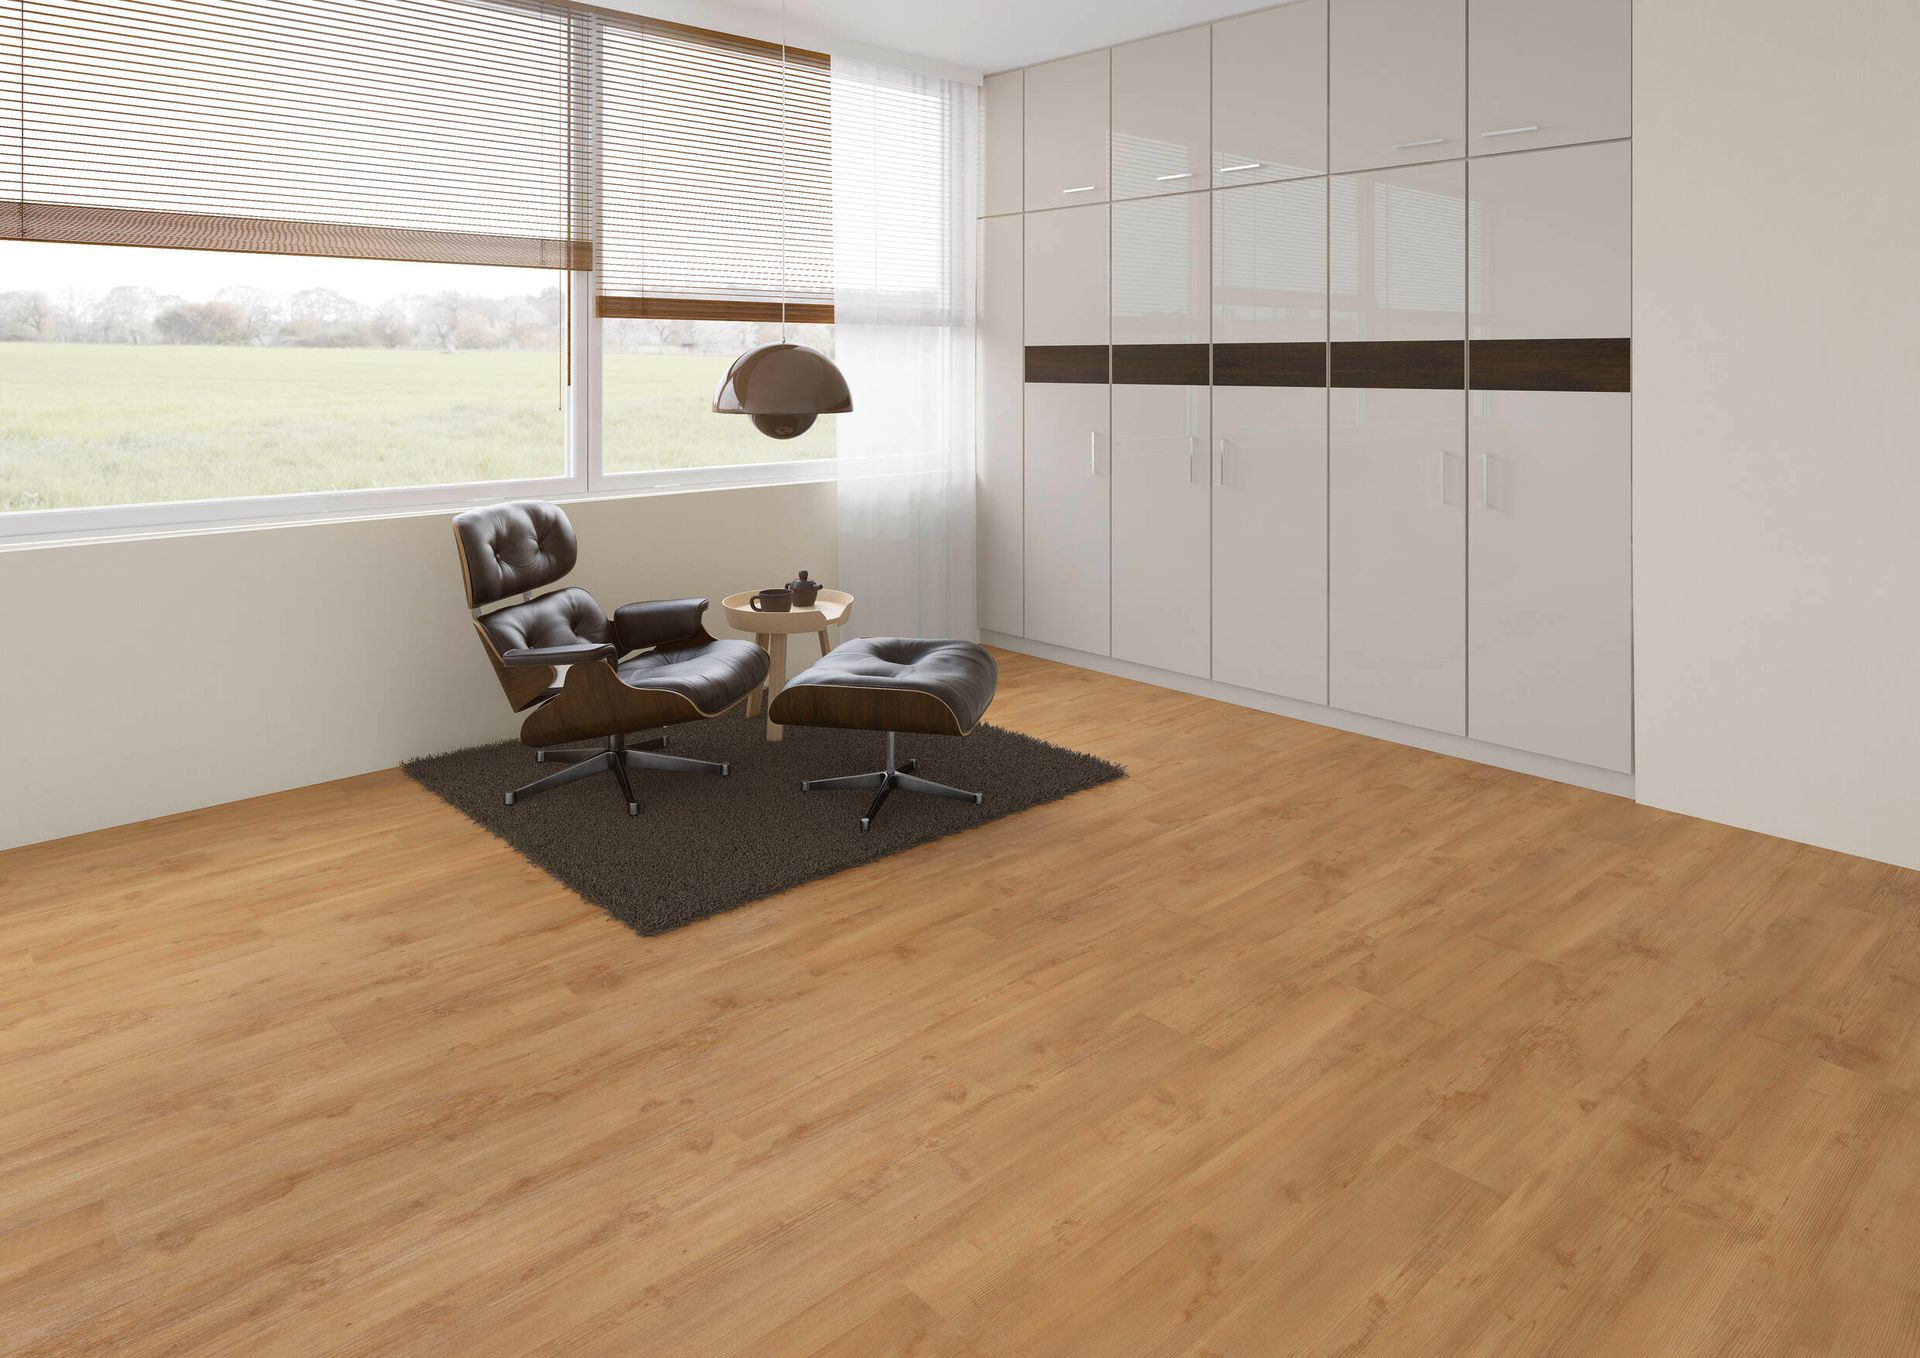 Designboden Dryback 2855 Golden Pine - Planke 18,42 cm x 121,92 cm - Nutzschichtdicke 0,4 mm